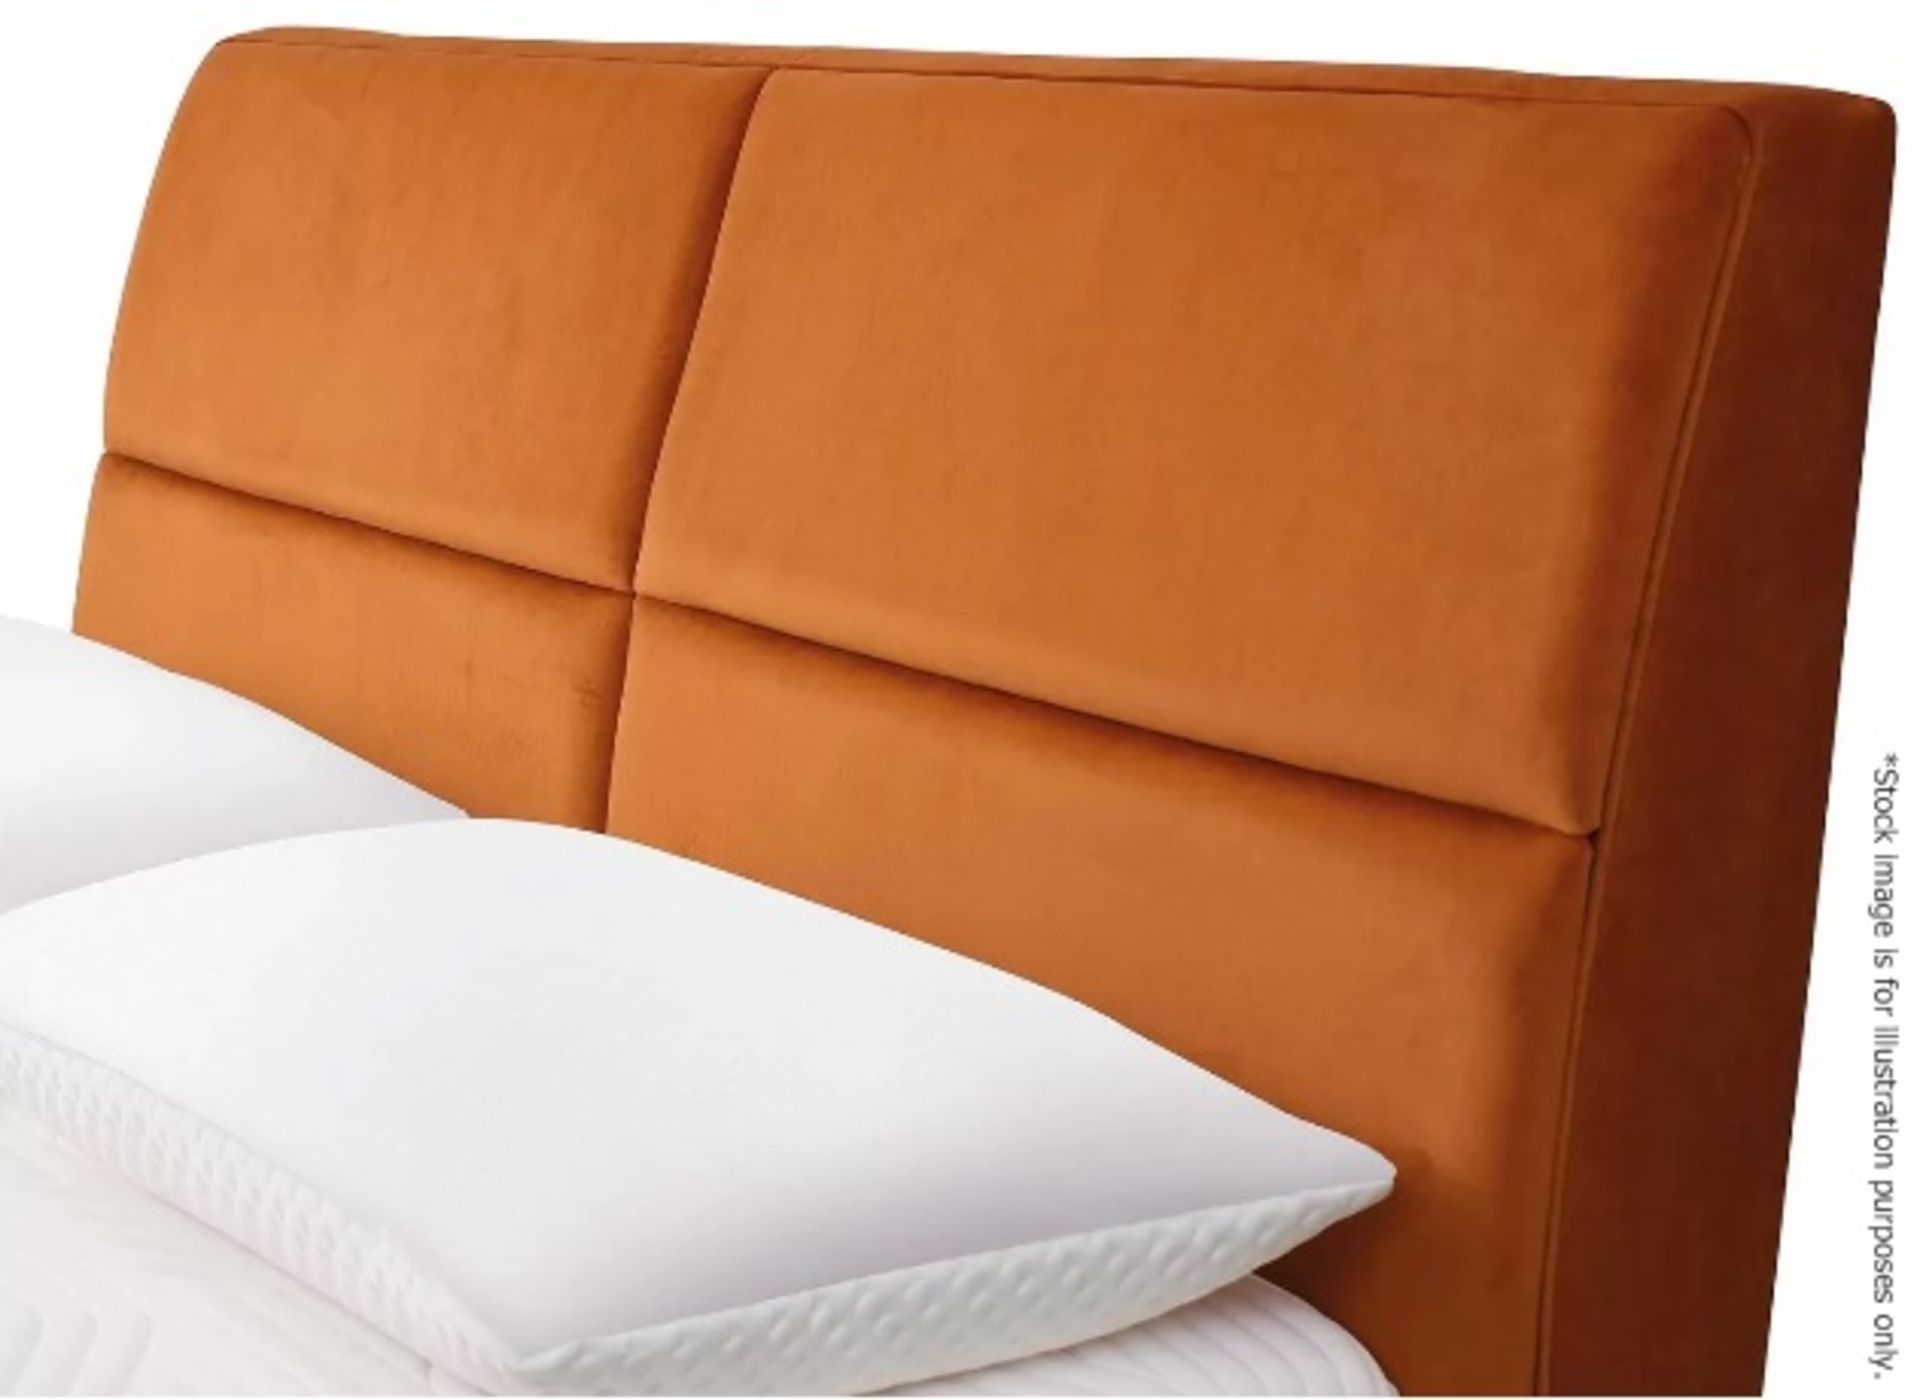 1 x TEMPUR Grafton Ottoman Double Bed Frame Upholstered In An Orange Velvet - Dimensions: 135x190cm - Image 4 of 10